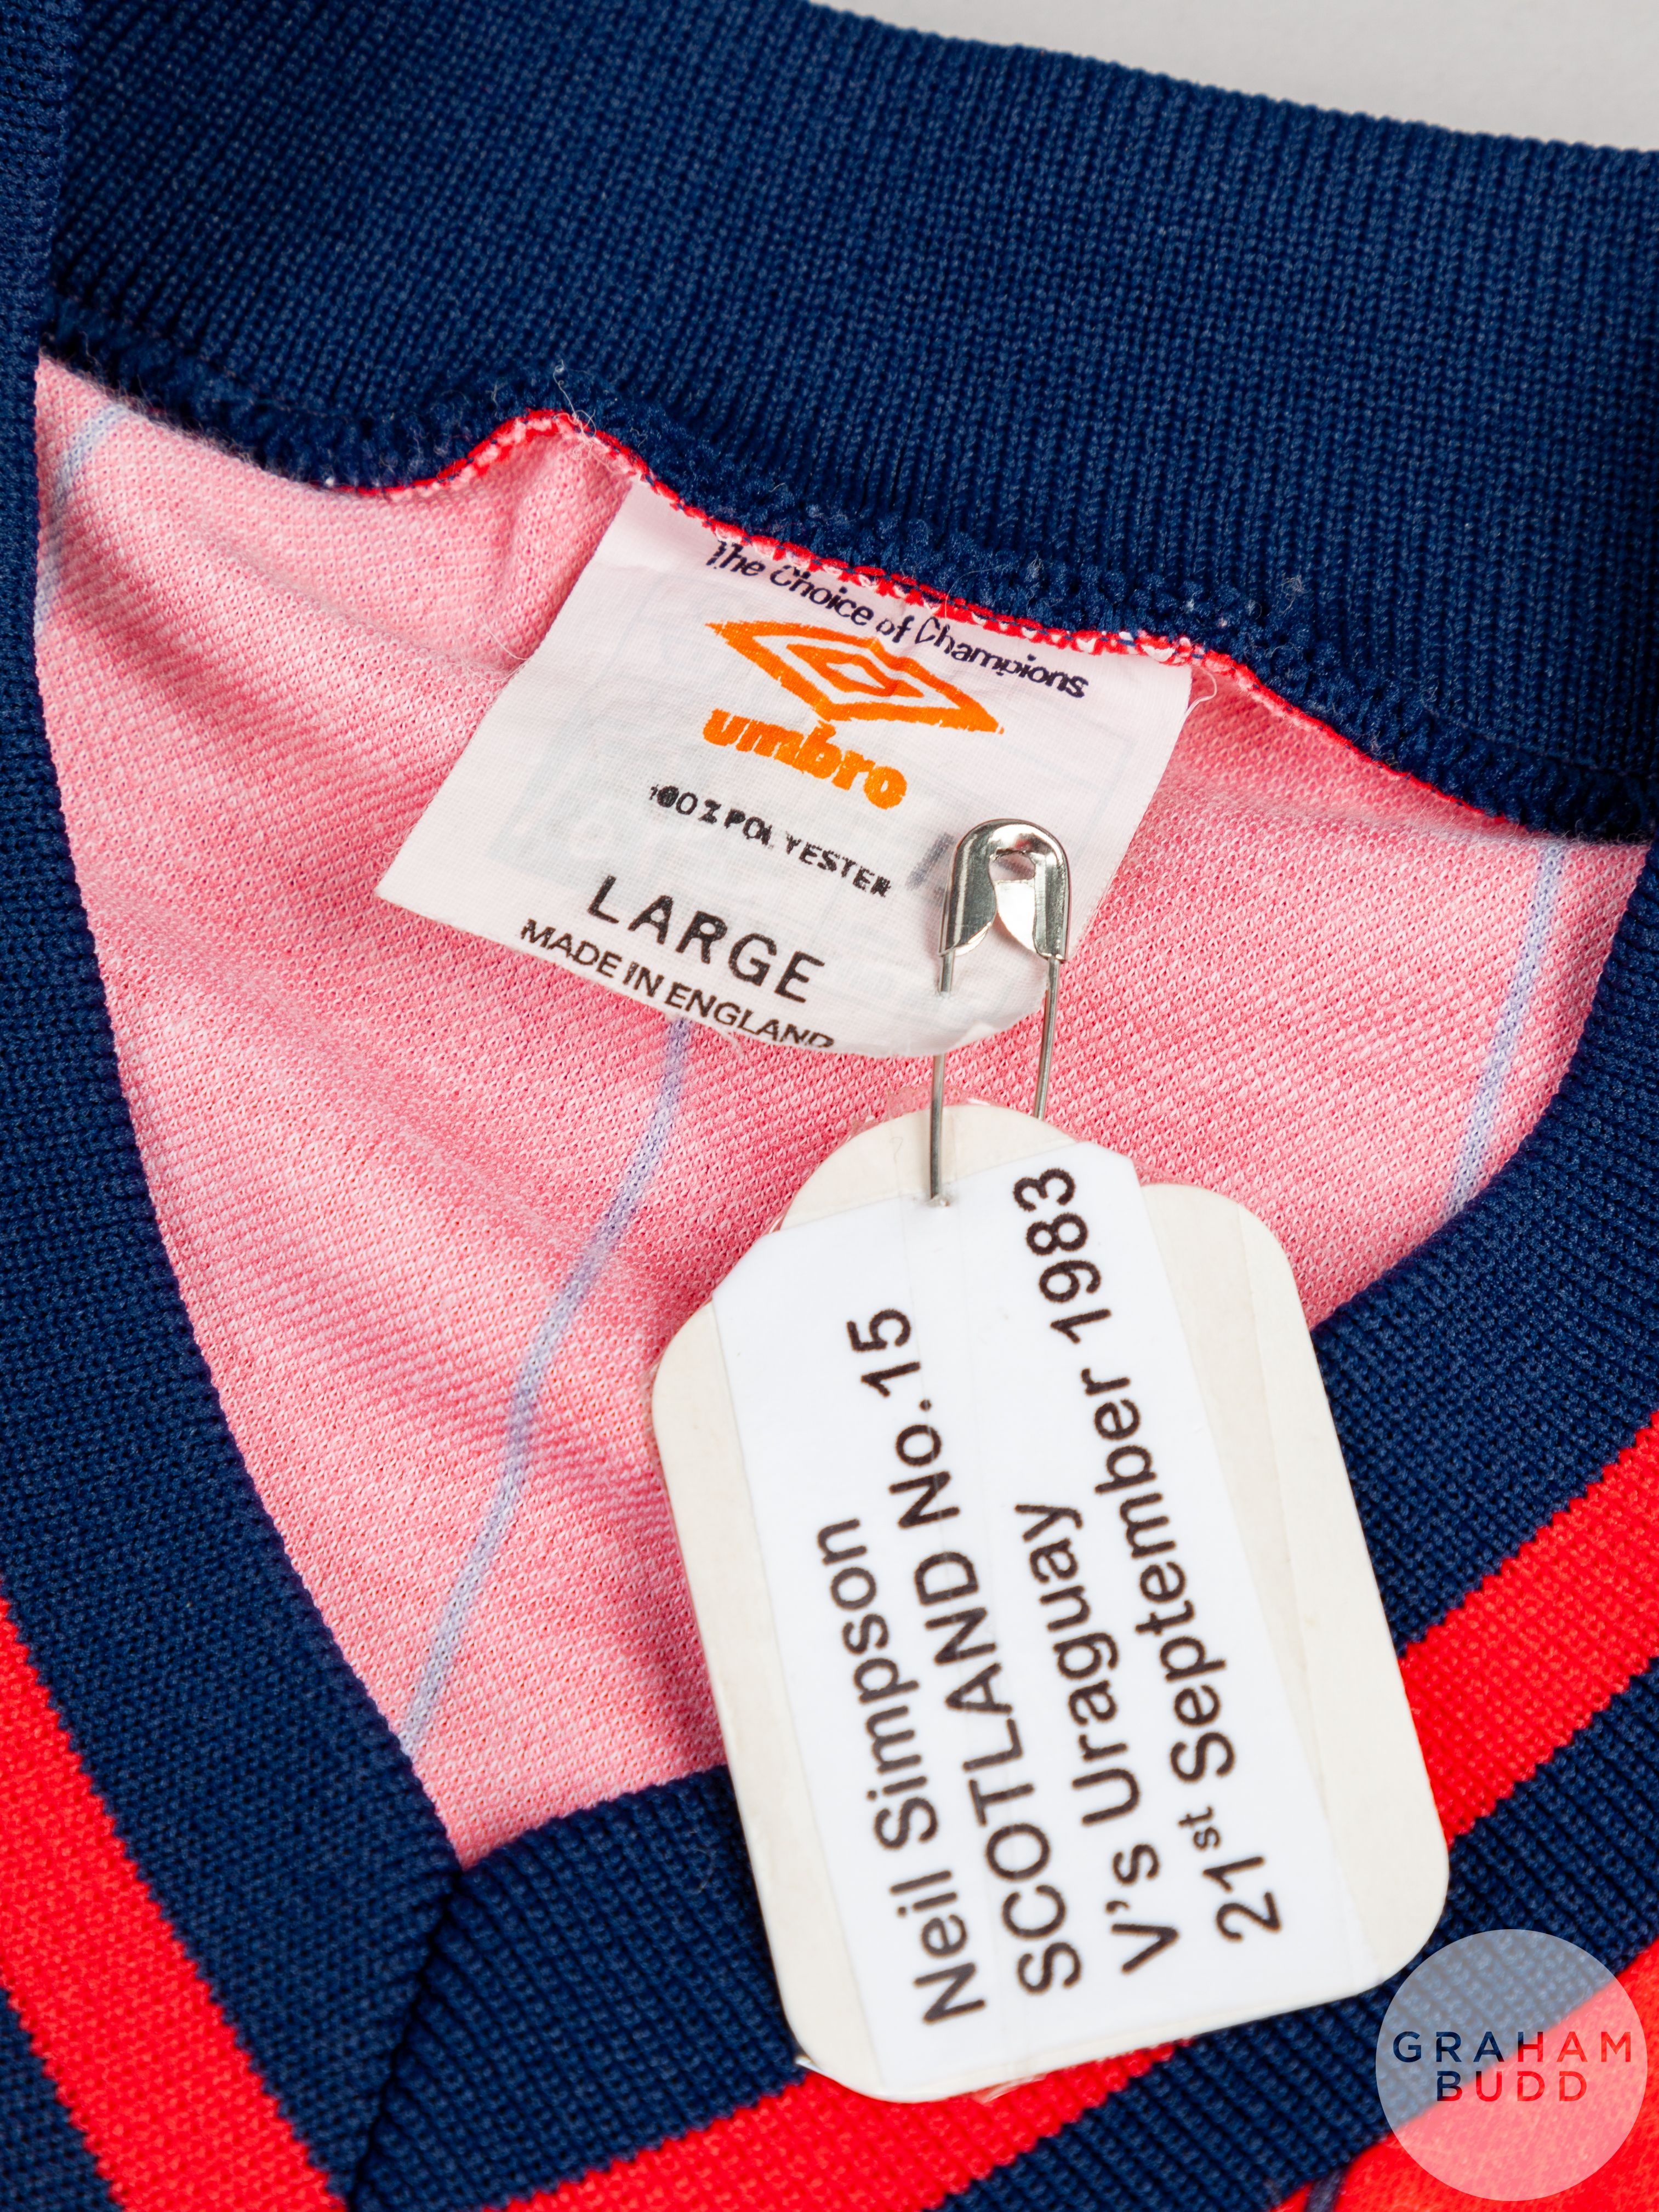 Neil Simpson red and blue No.15 Scotland v. Uruguay short-sleeved shirt - Image 4 of 4